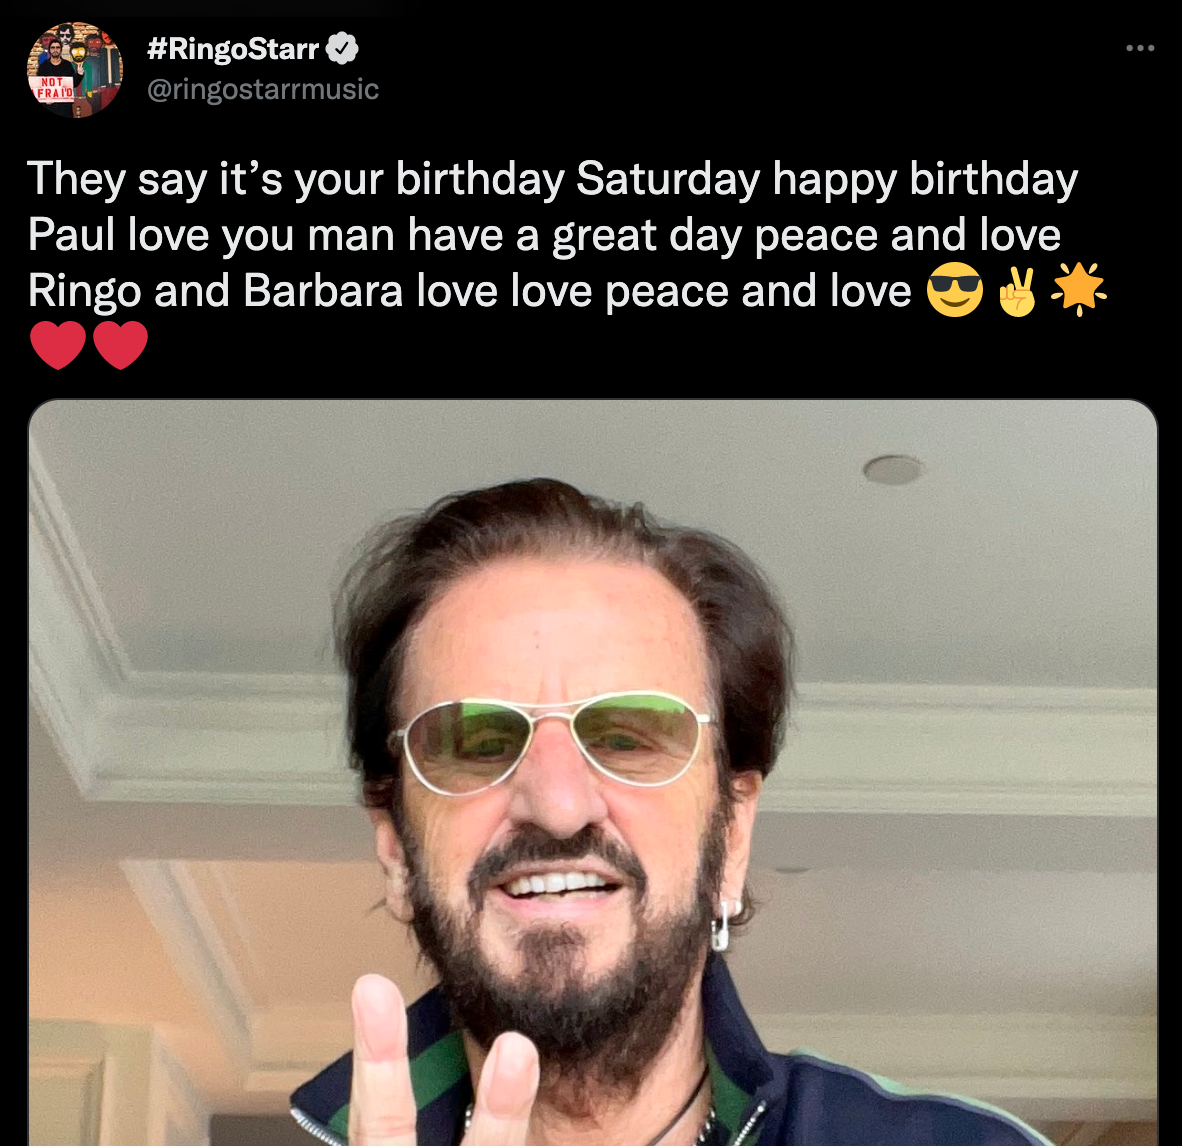 Ringo Starr sent Paul McCartney a birthday message on Twitter